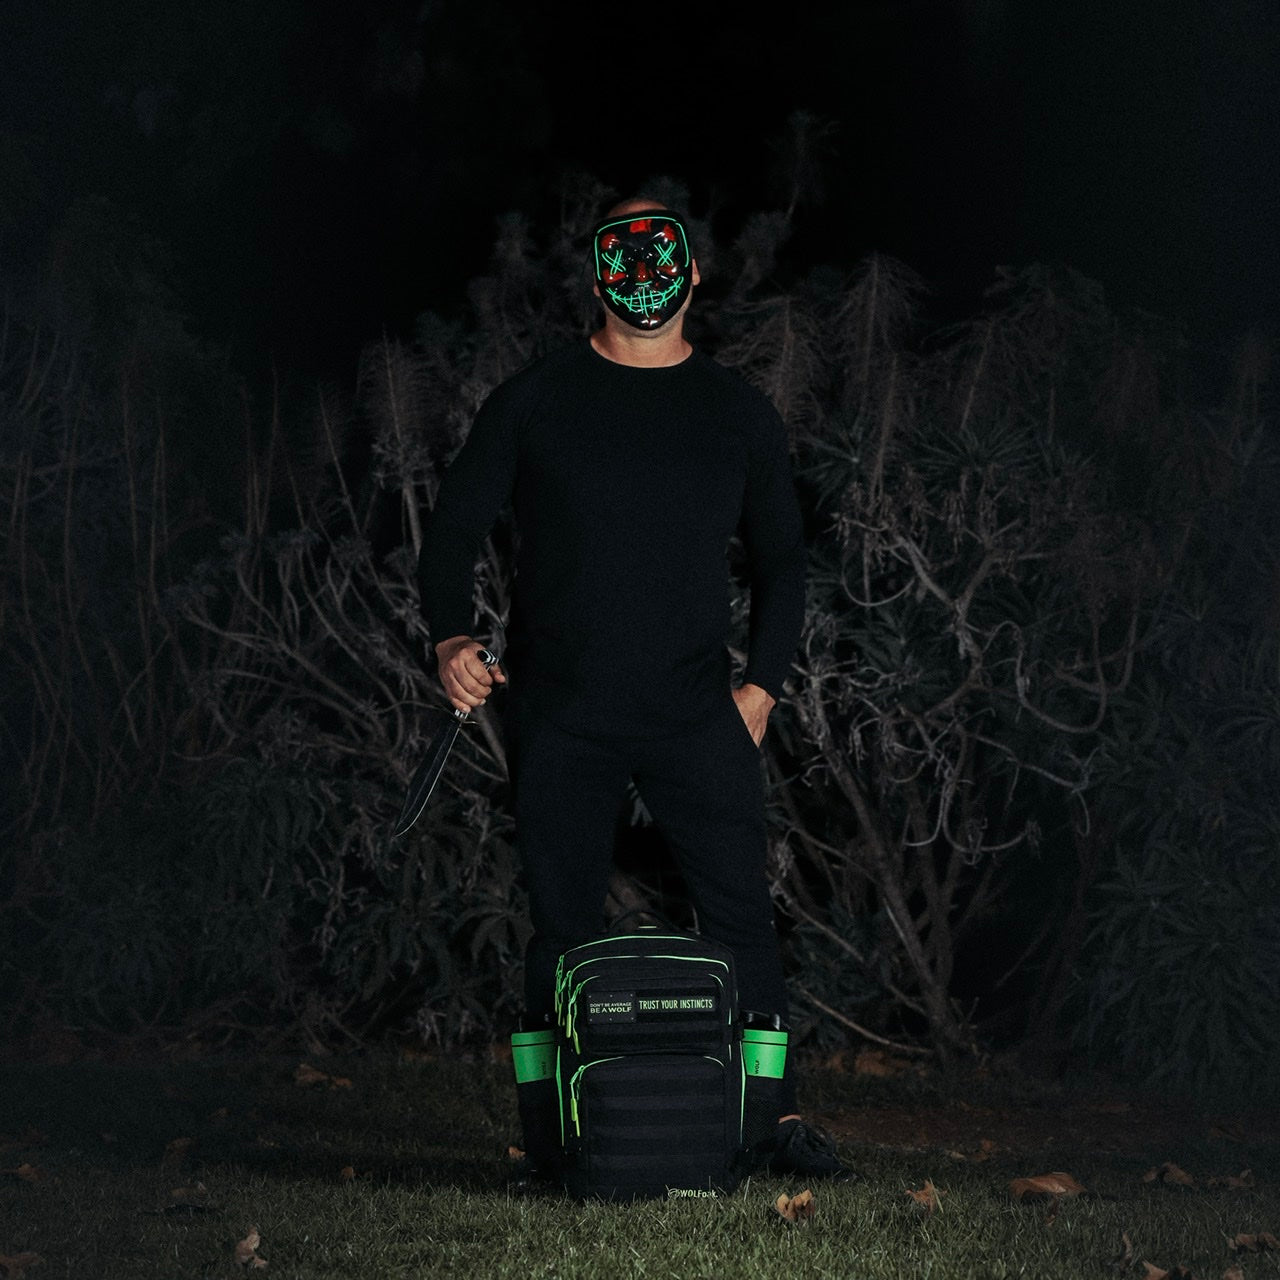 35L Backpack Black Neon Green